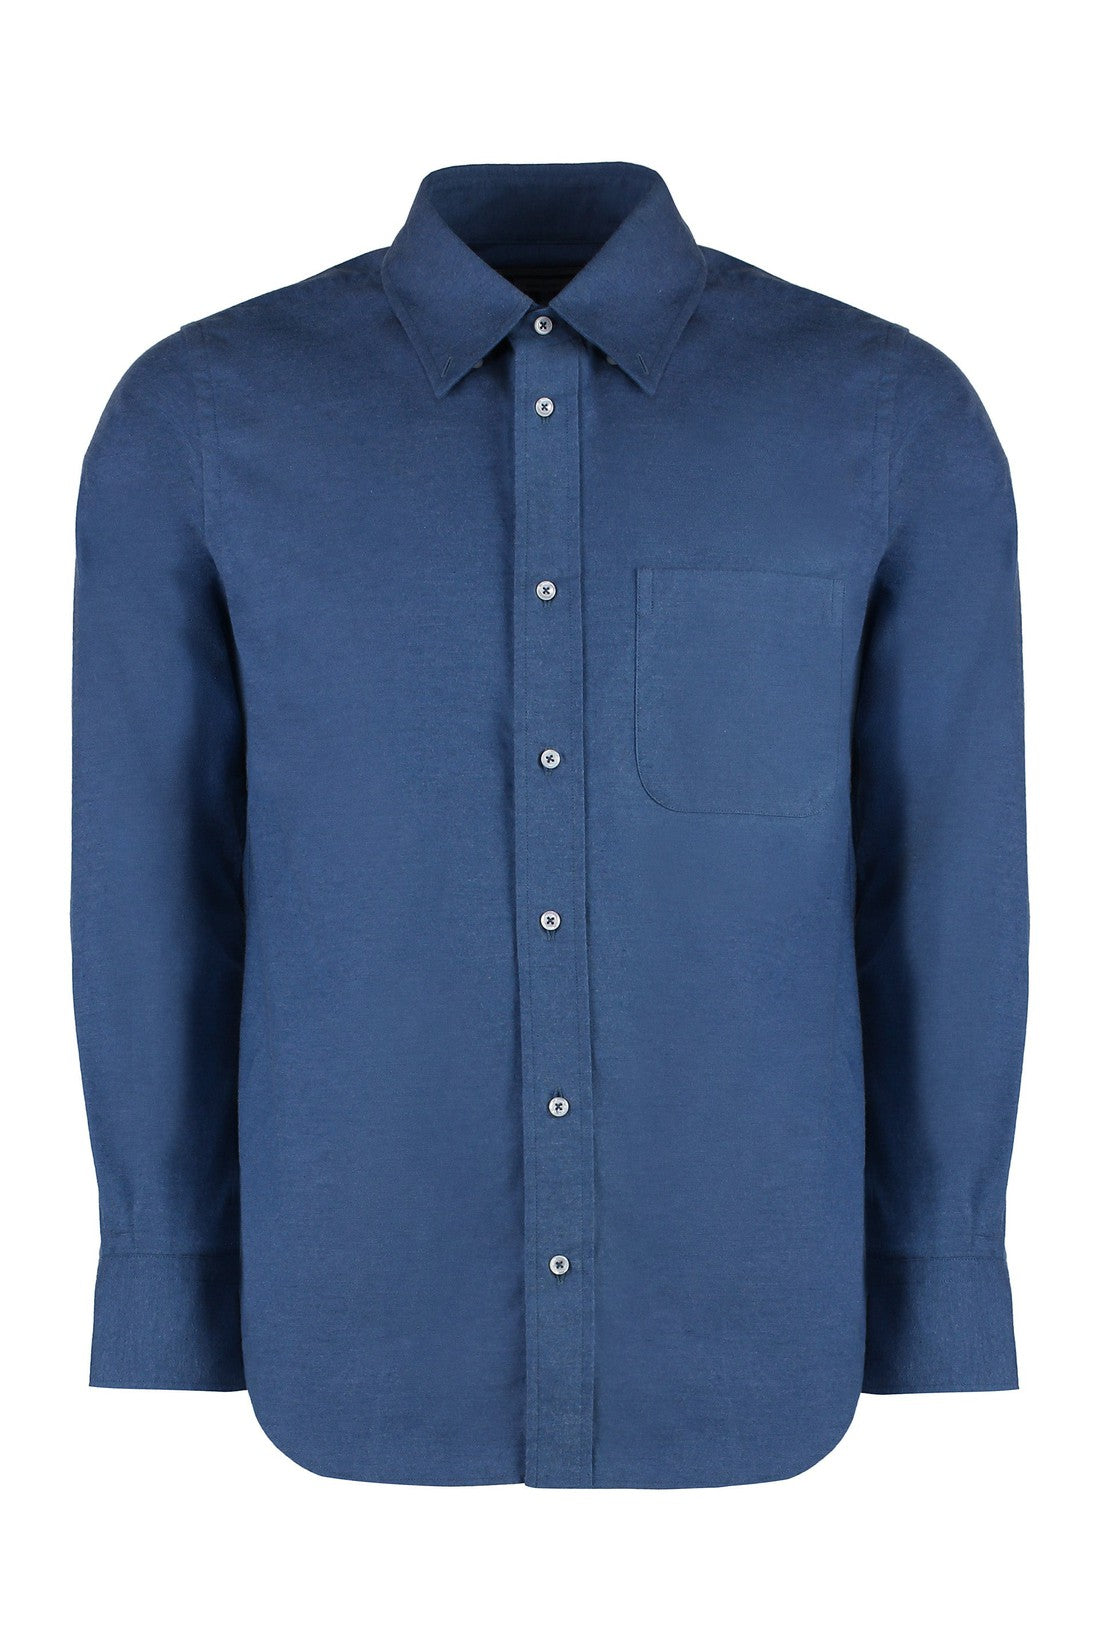 Thom Browne-OUTLET-SALE-Flannel shirt-ARCHIVIST